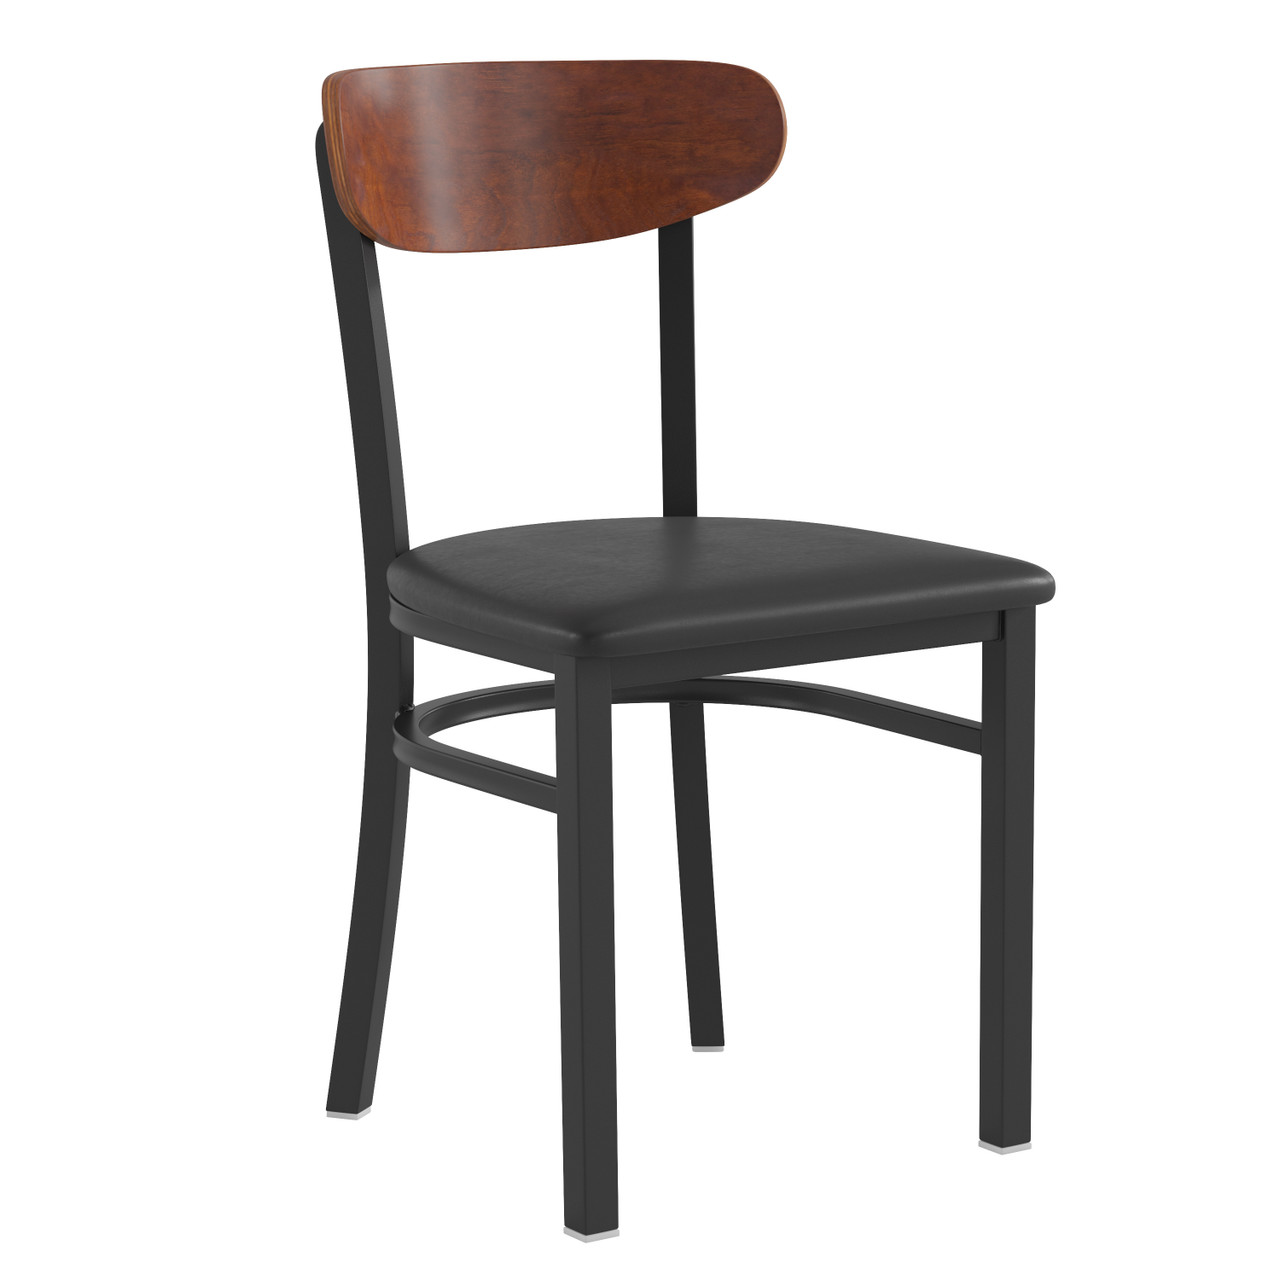 Flash Furniture Wright Commercial Dining Chair w/ 500 LB. Capacity Black Steel Frame, Walnut Finish Wooden Boomerang Back, & Black Vinyl Seat, Model#